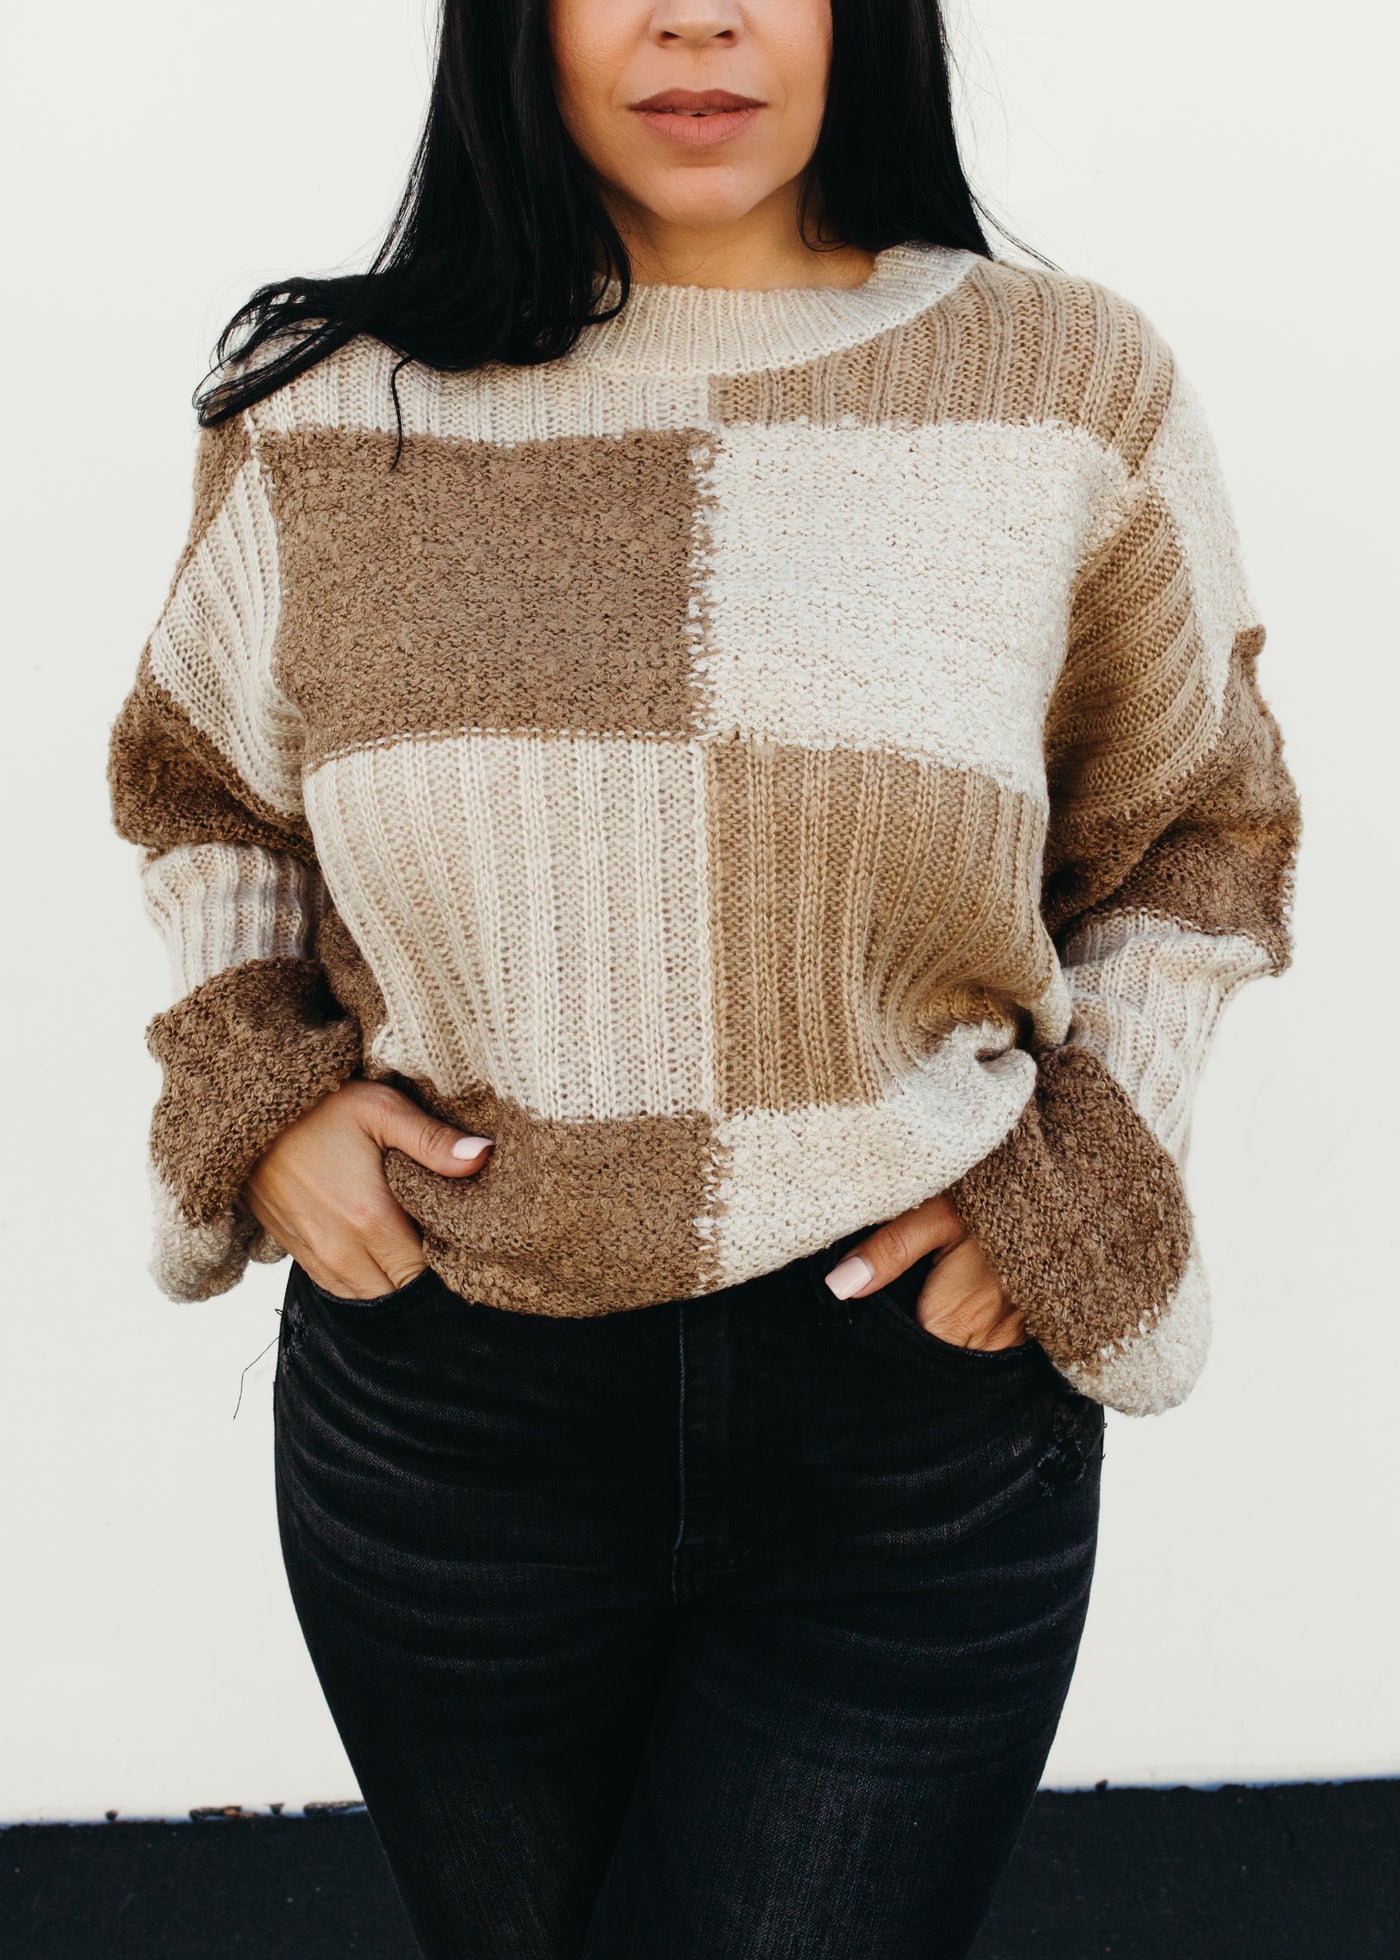 Checkered Past - Textured Checkered Sweater